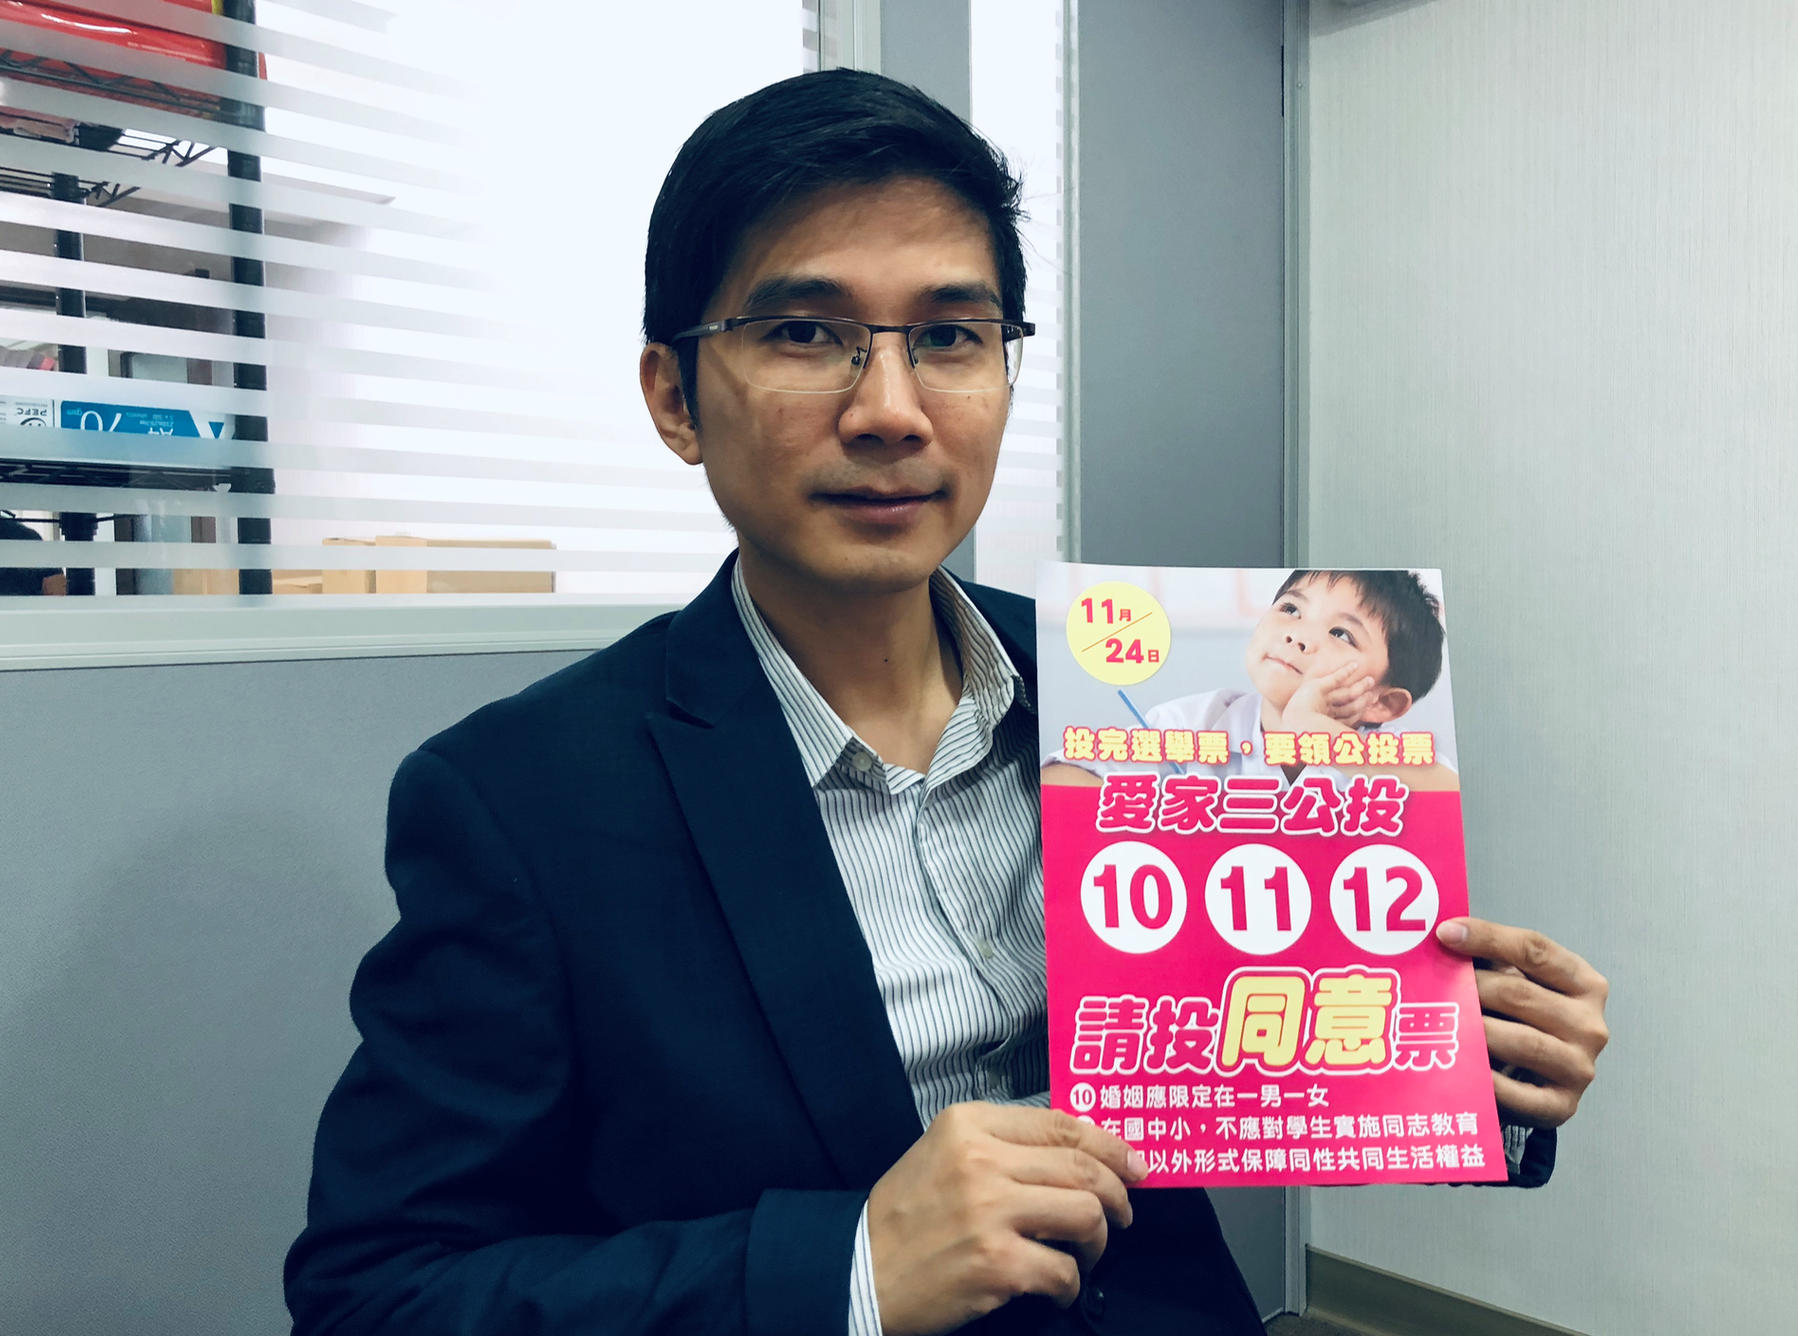 Frank Tseng with a leaflet